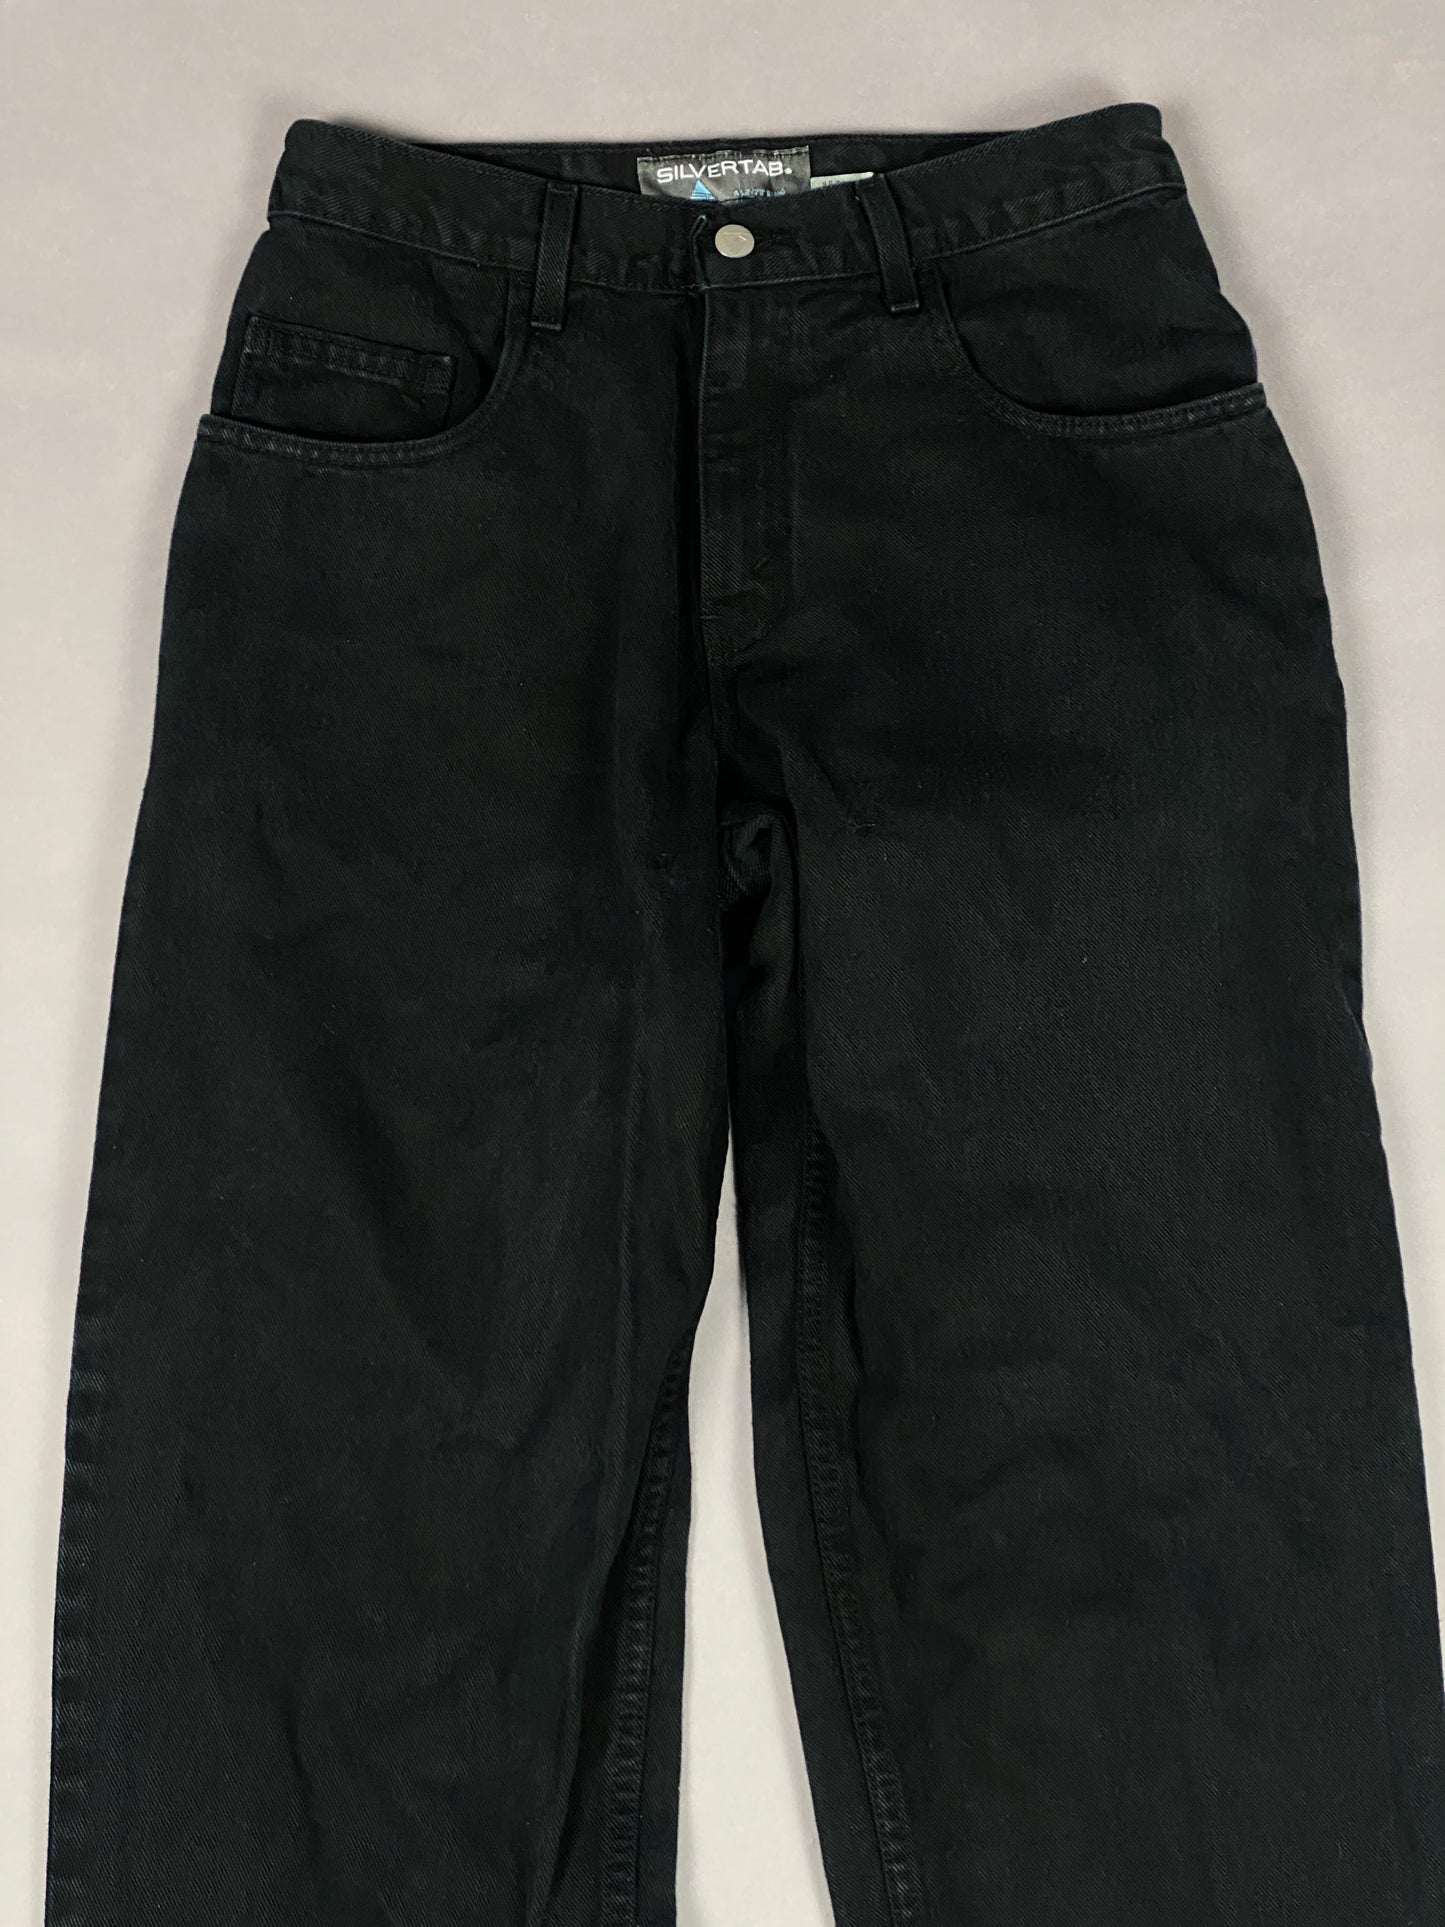 Levis Silvertab Vintage Baggy Jeans - 30x32